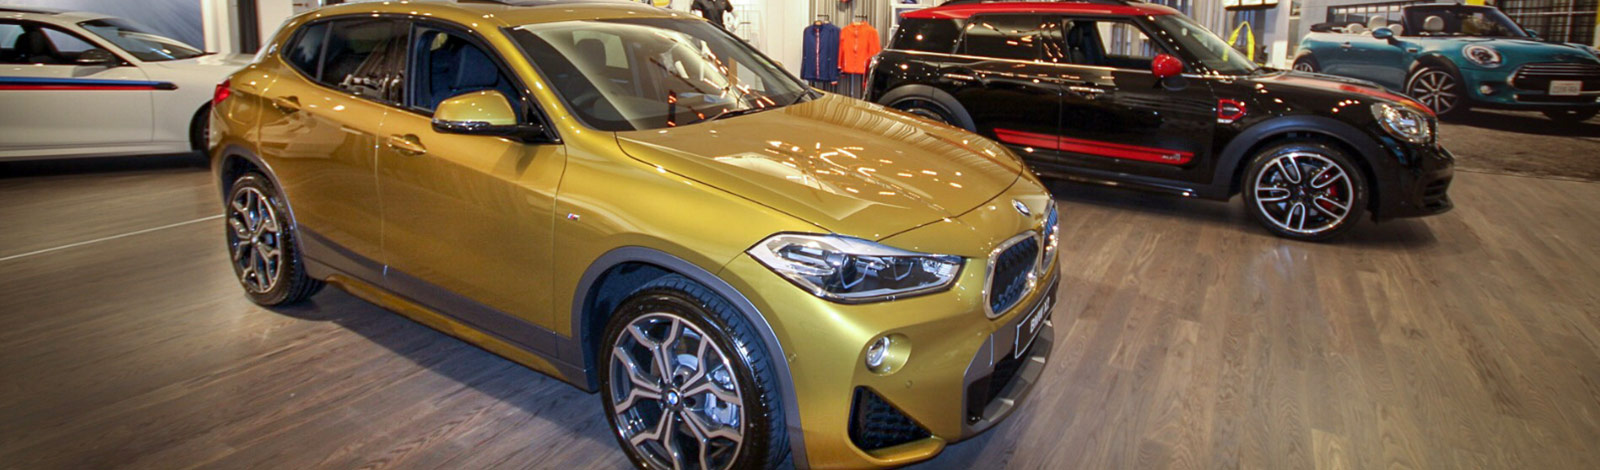 New Gold Coast BMW shop opens